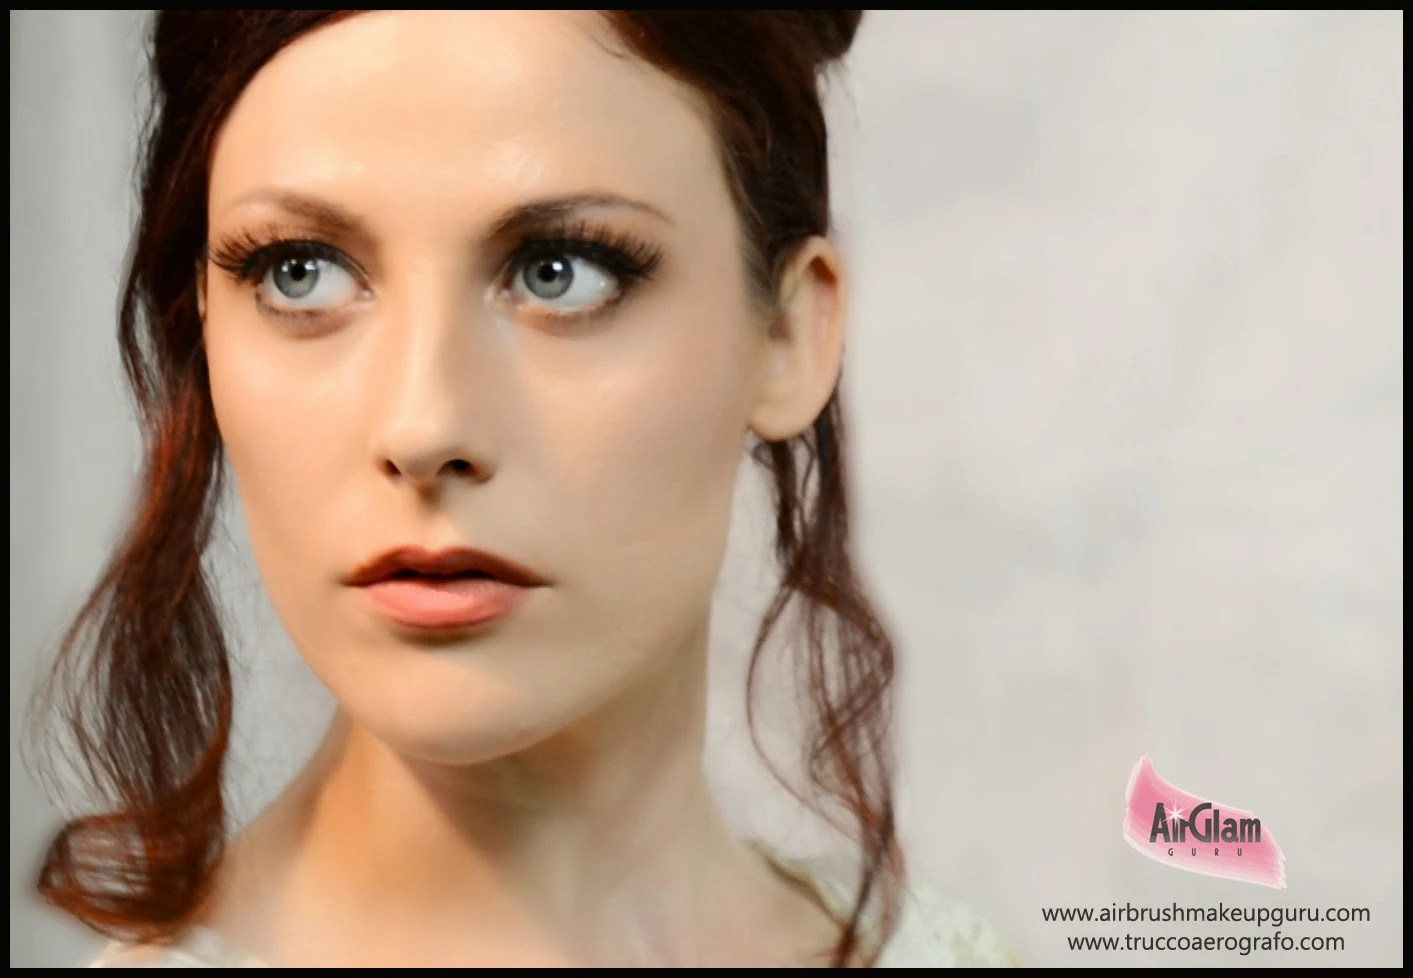 The Airbrush Makeup Guru Mistair Full Airbrush Makeup Bridal Video